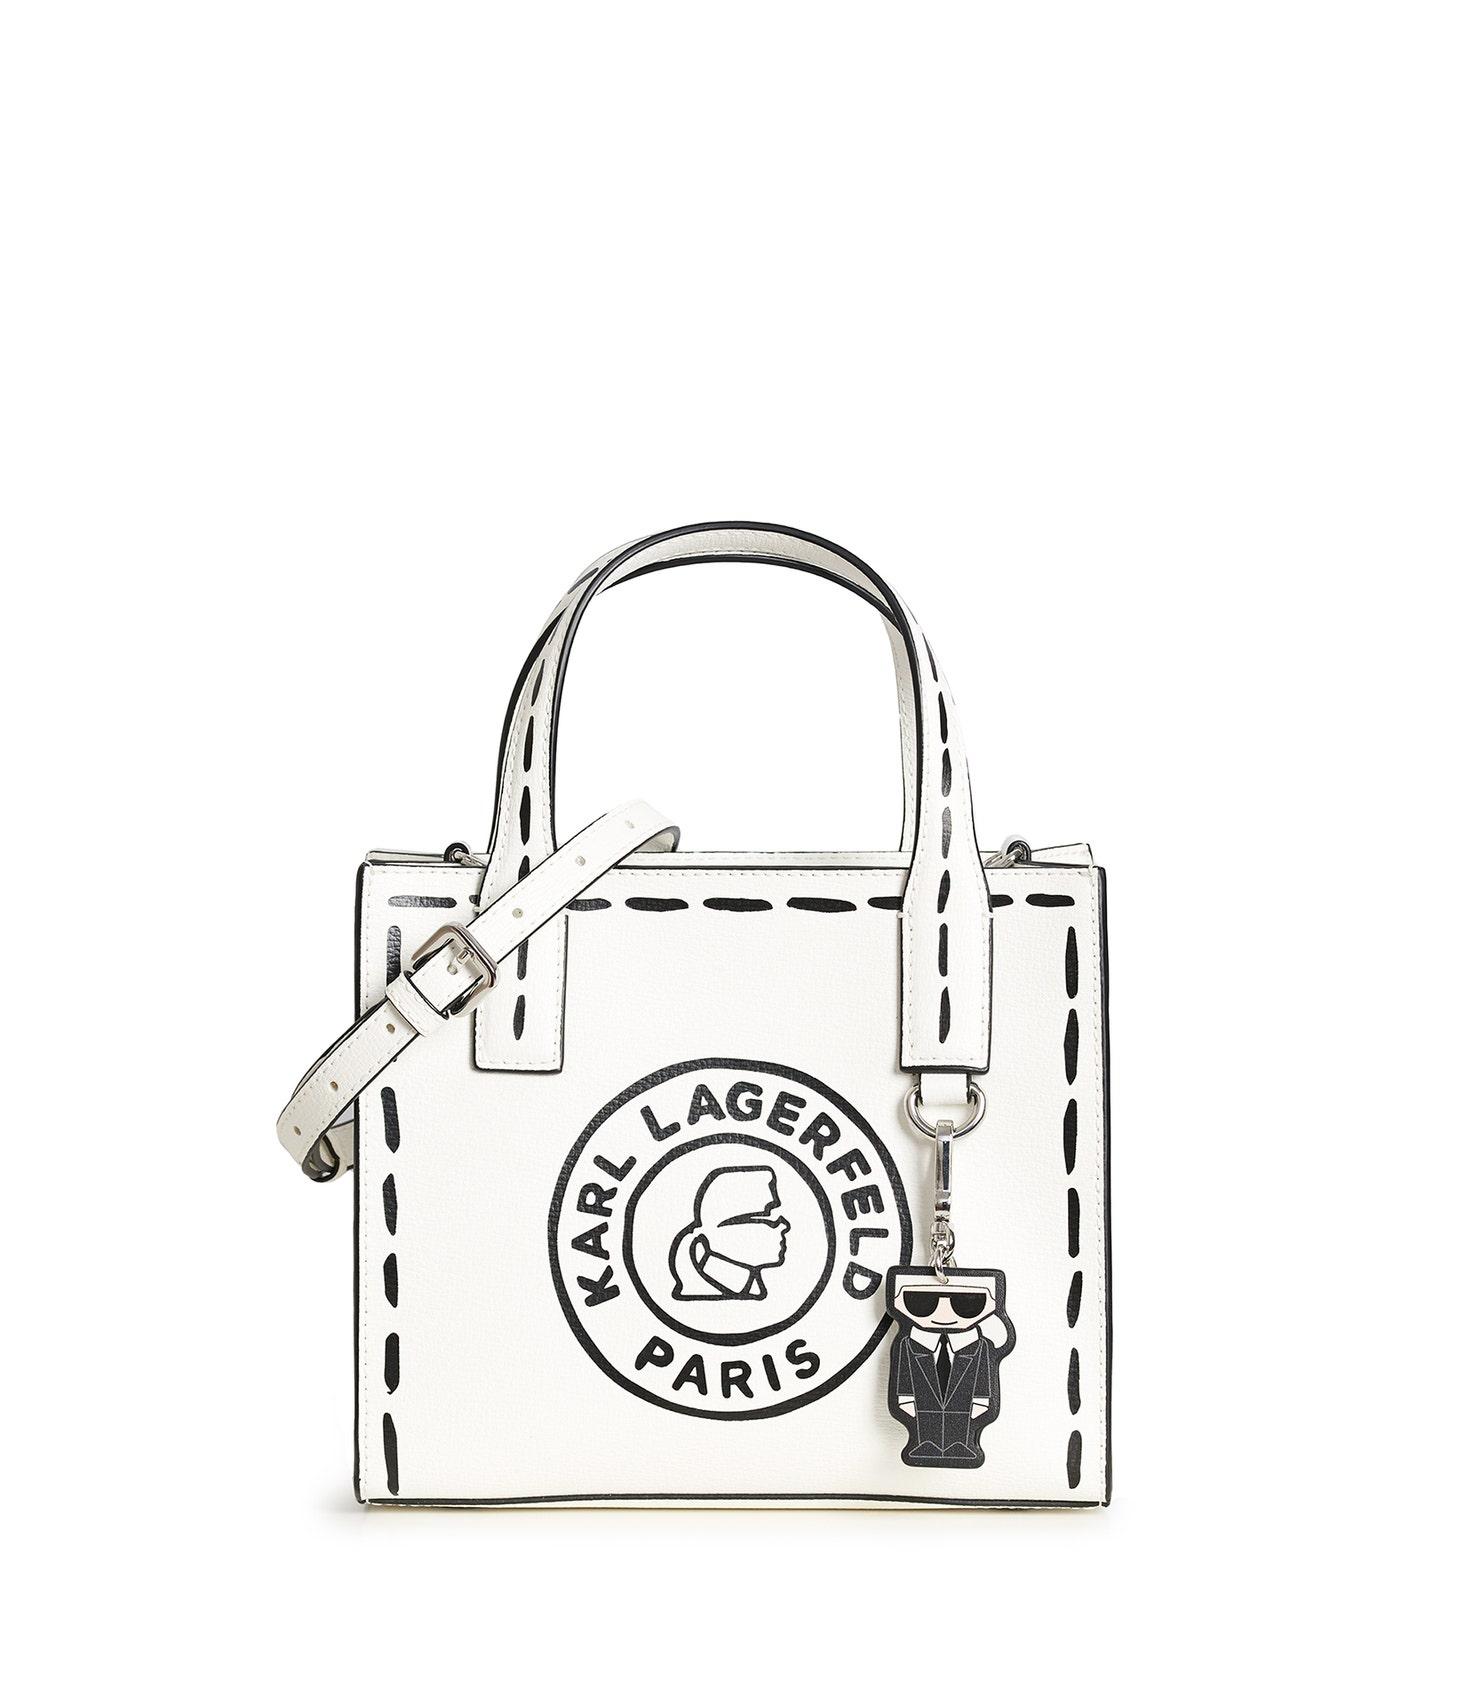 Karl Lagerfeld Paris Small Small Boucle Nouveau Tote Bag